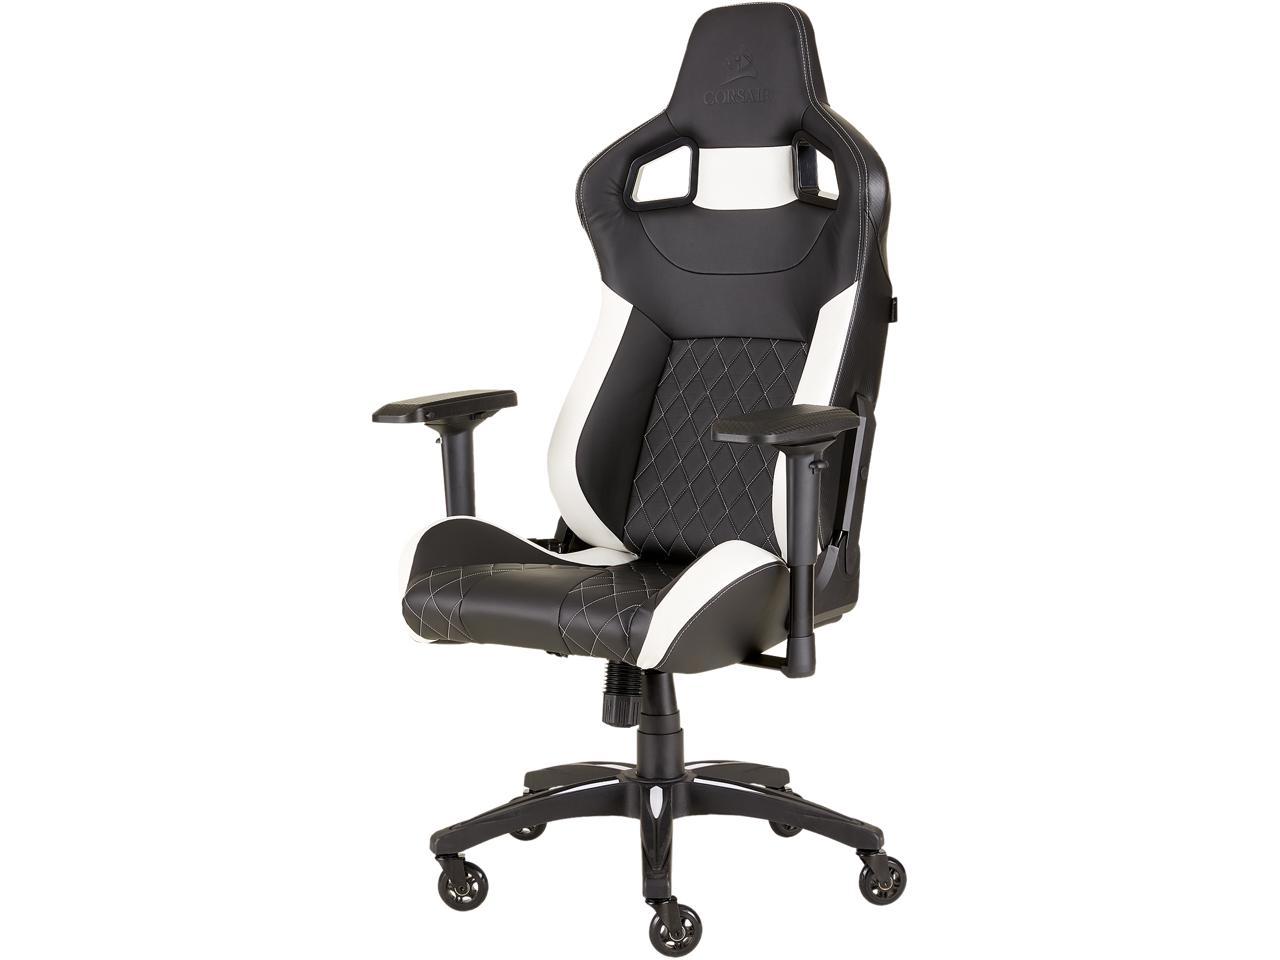 CORSAIR gaming chair T1, černá/bílá